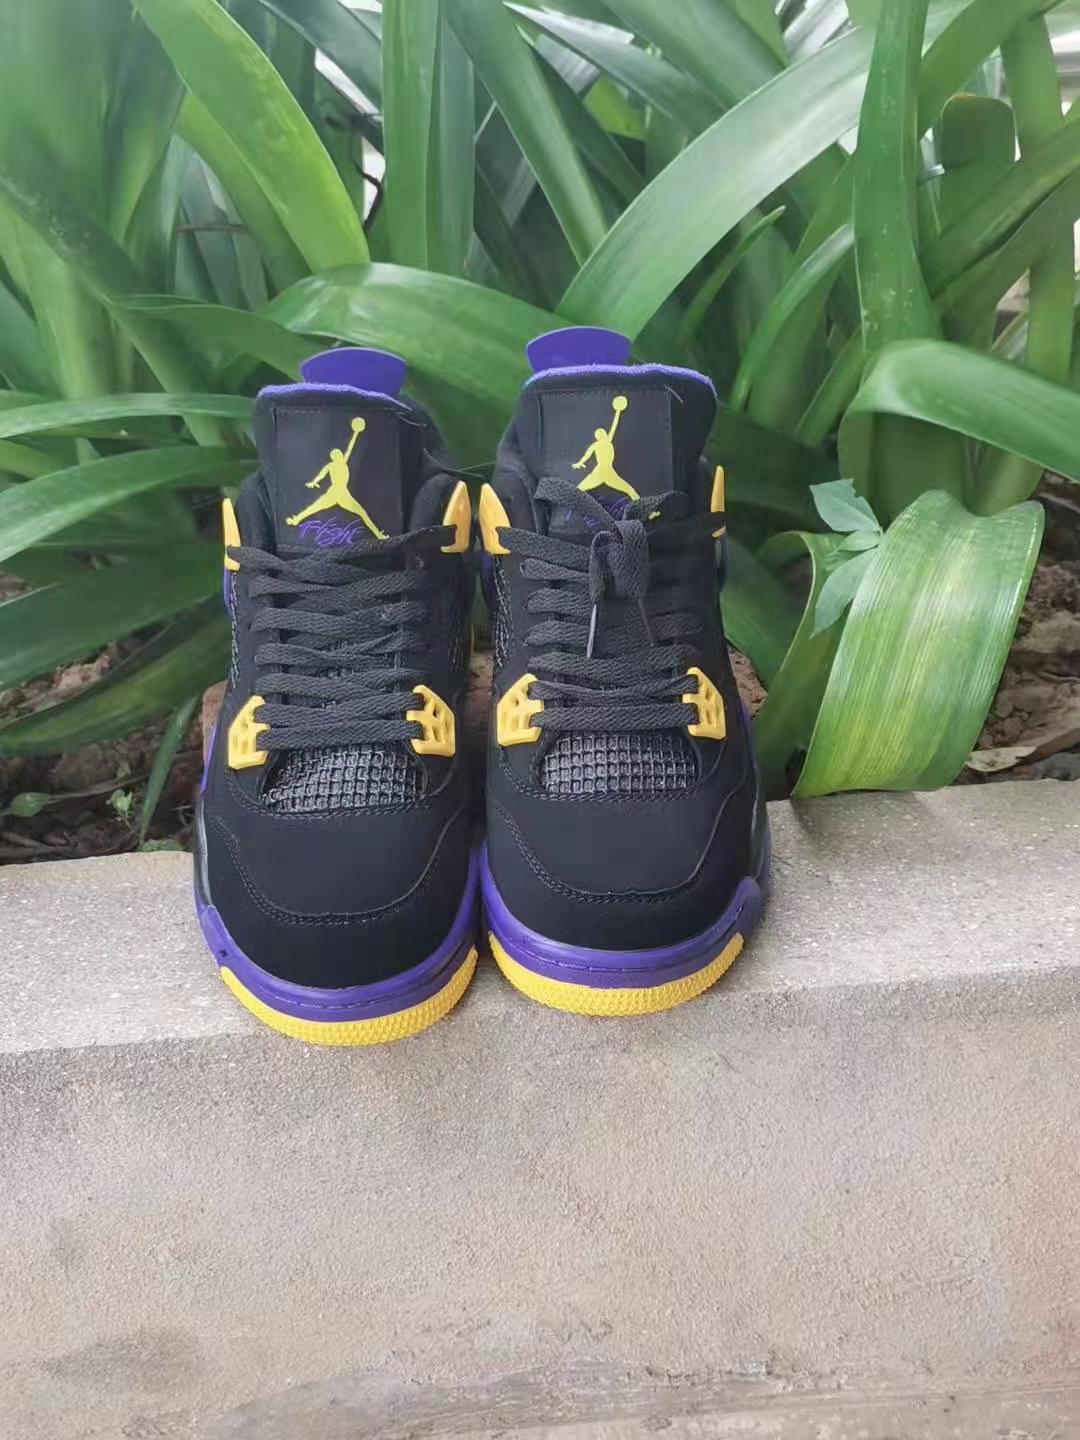 New 2021 Air Jordan 4 Purple Black Yellow Shoes